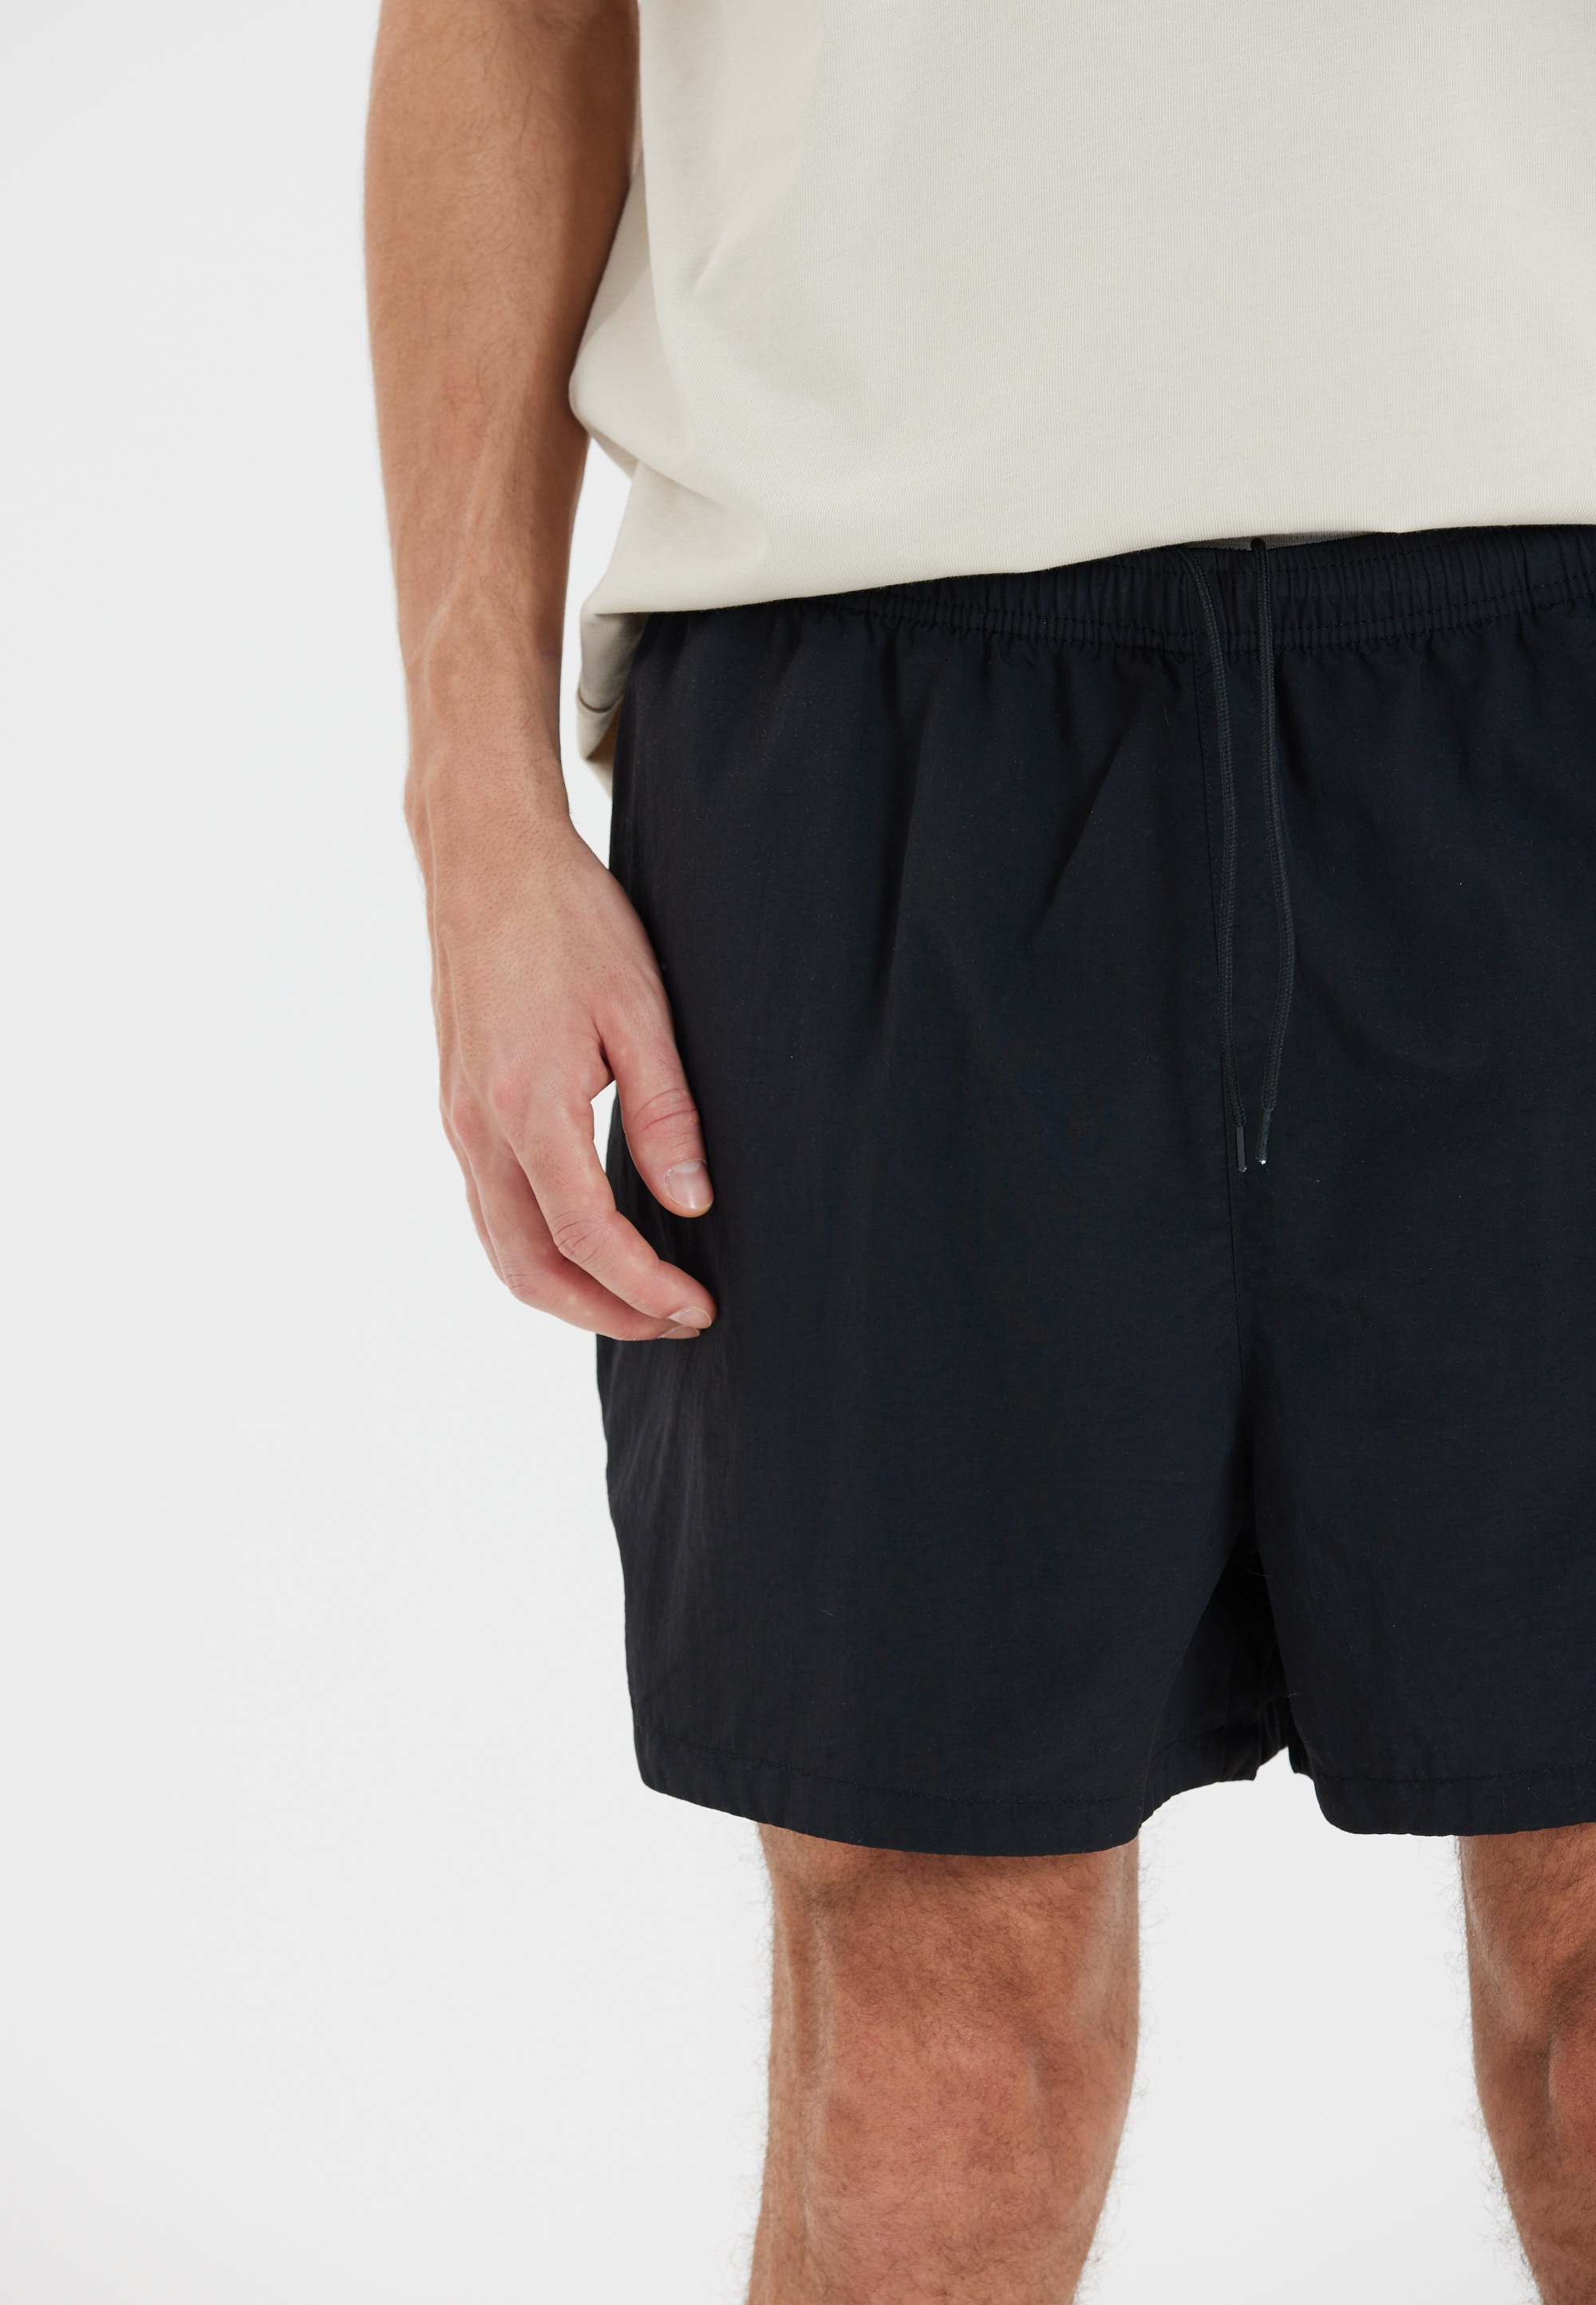 SOS Shorts »Whitsunday«, aus atmungsaktivem und leichtem Material